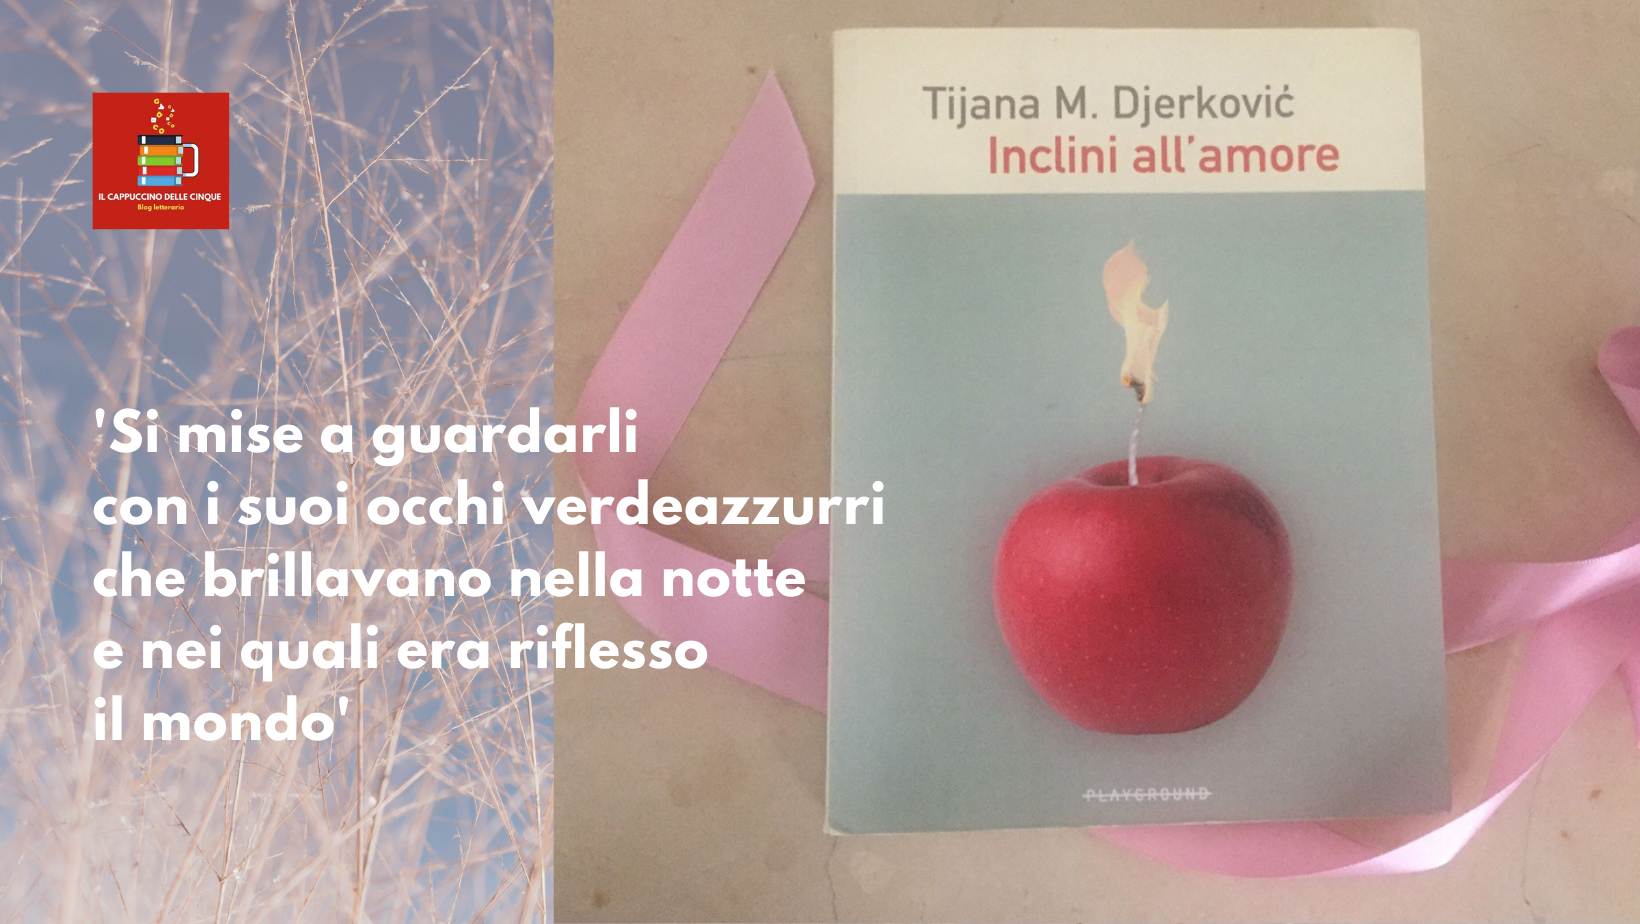 Recensione 'Inclini all’amore' di Tijana M. Djerković 